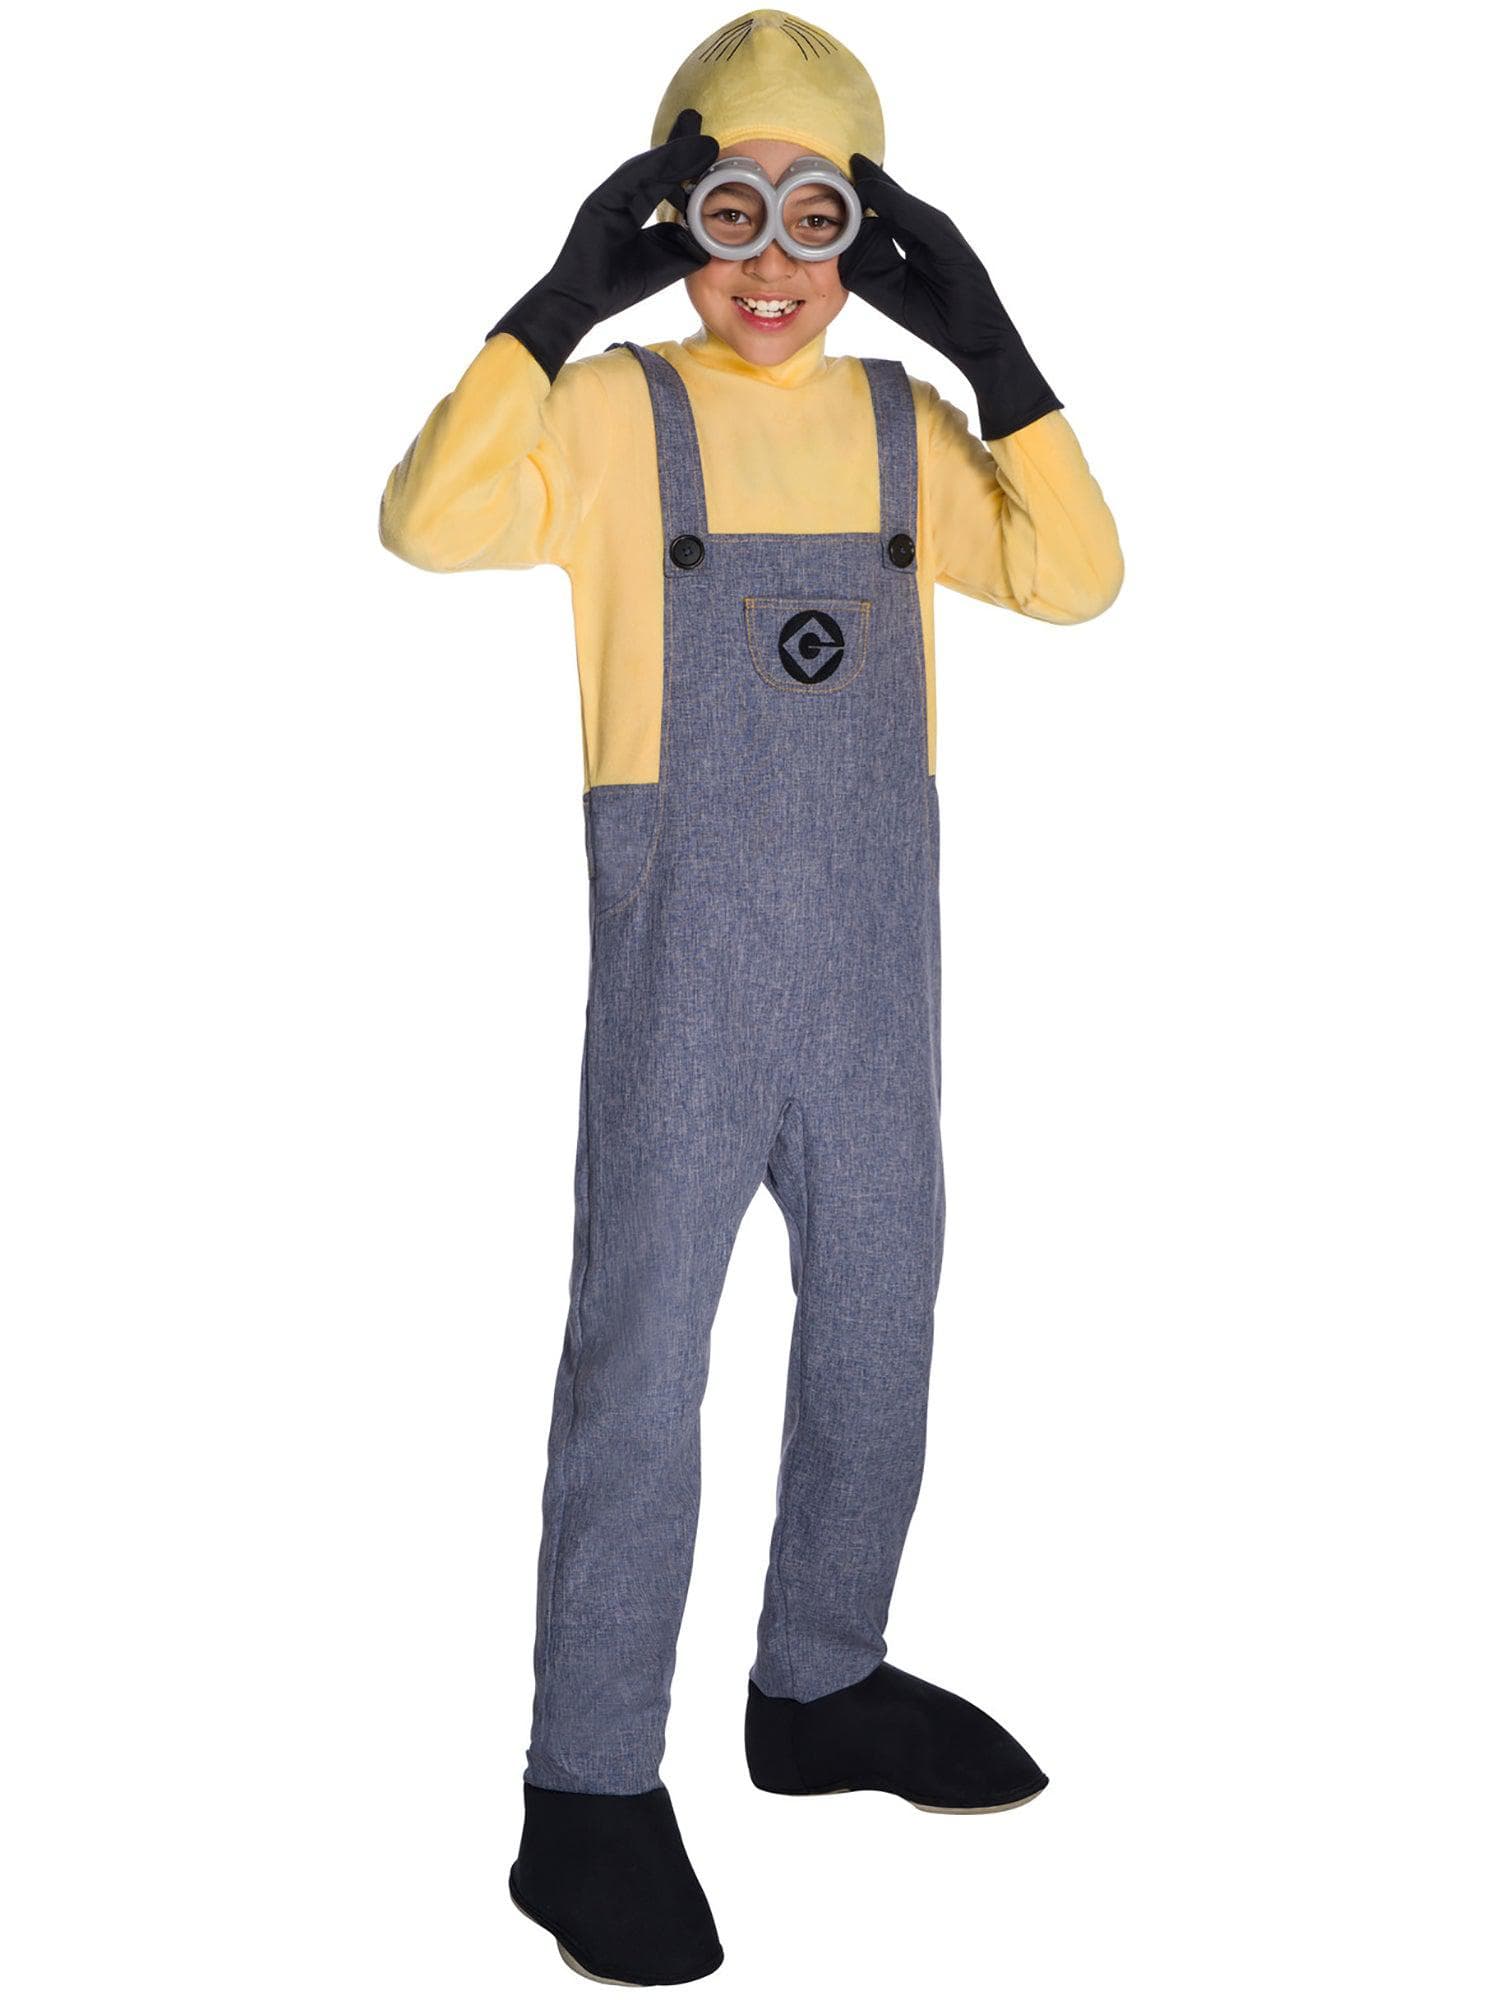 Kids Despicable Me Minions Deluxe Costume - costumes.com